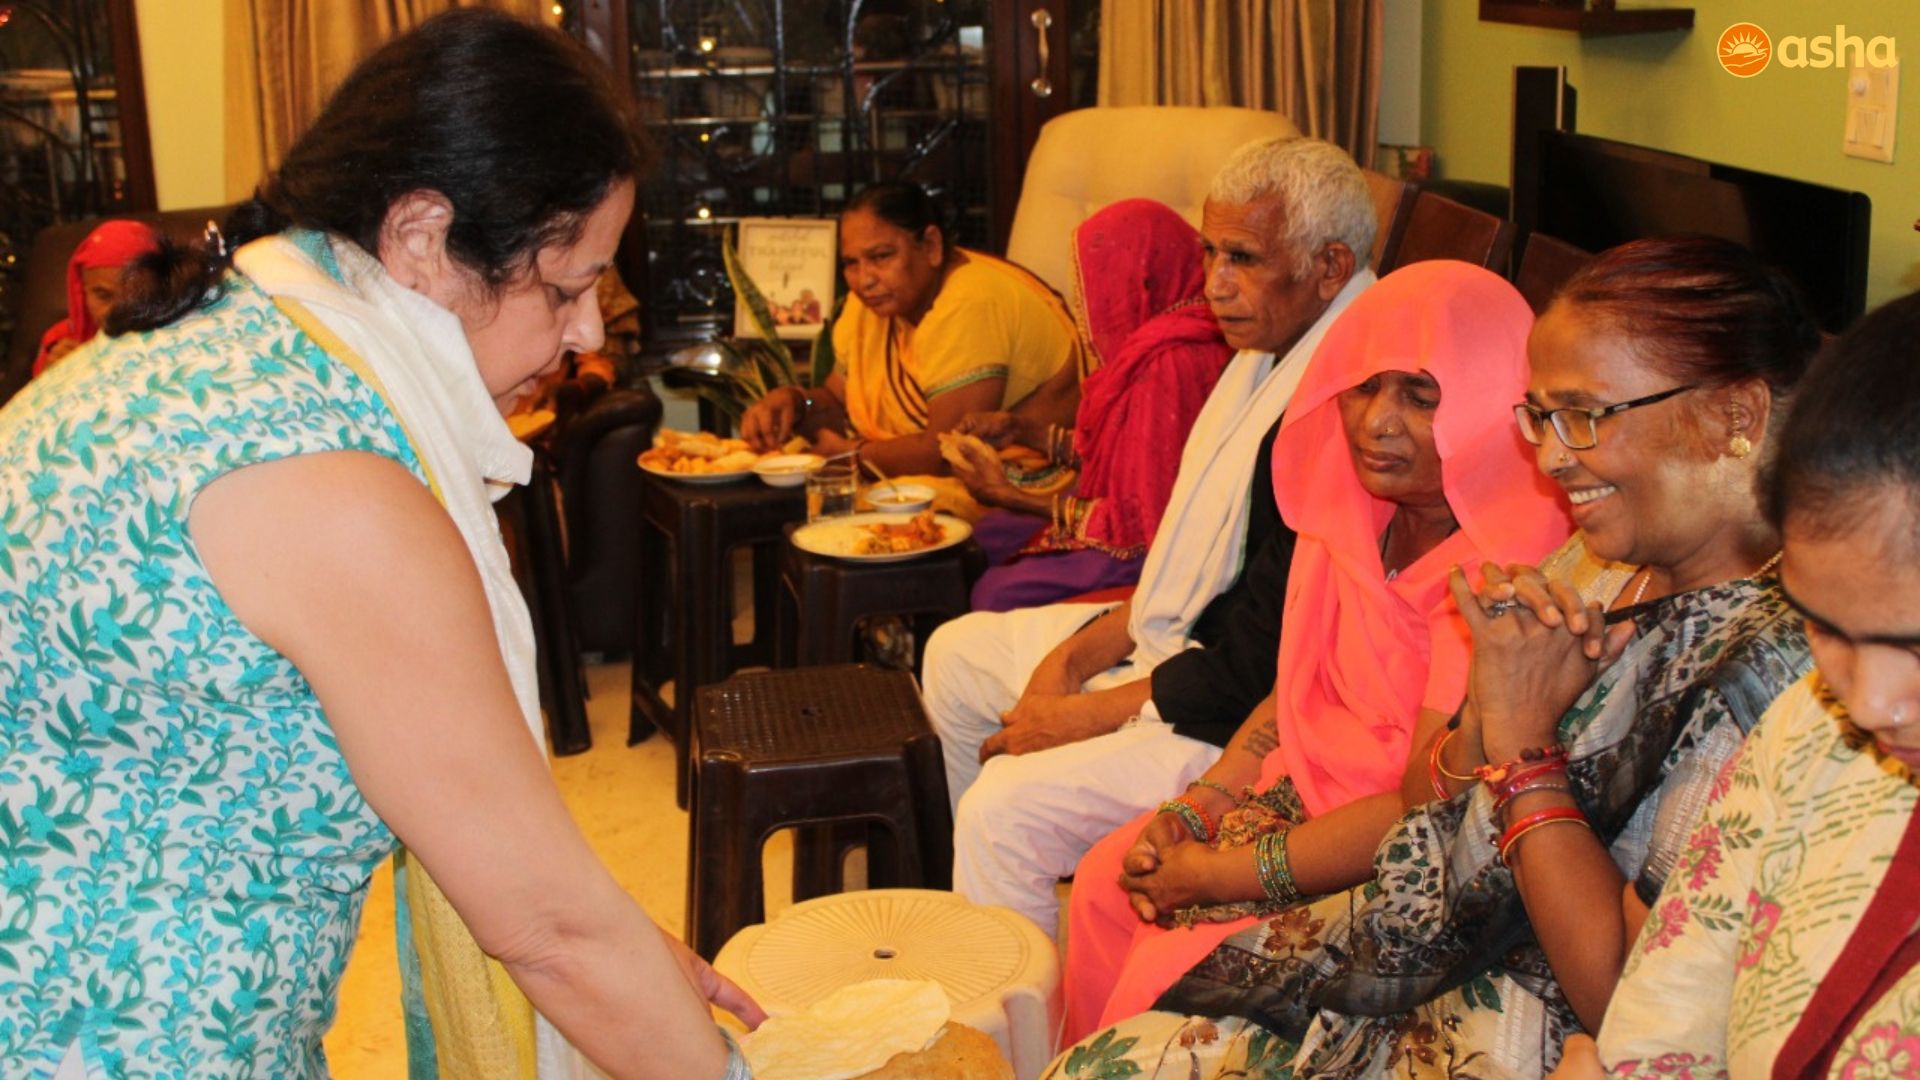 Dr Kiran Practising Servanthood in Leadership with the Elderlies from Asha’s Dr Ambedkar Basti slum community at her Residence